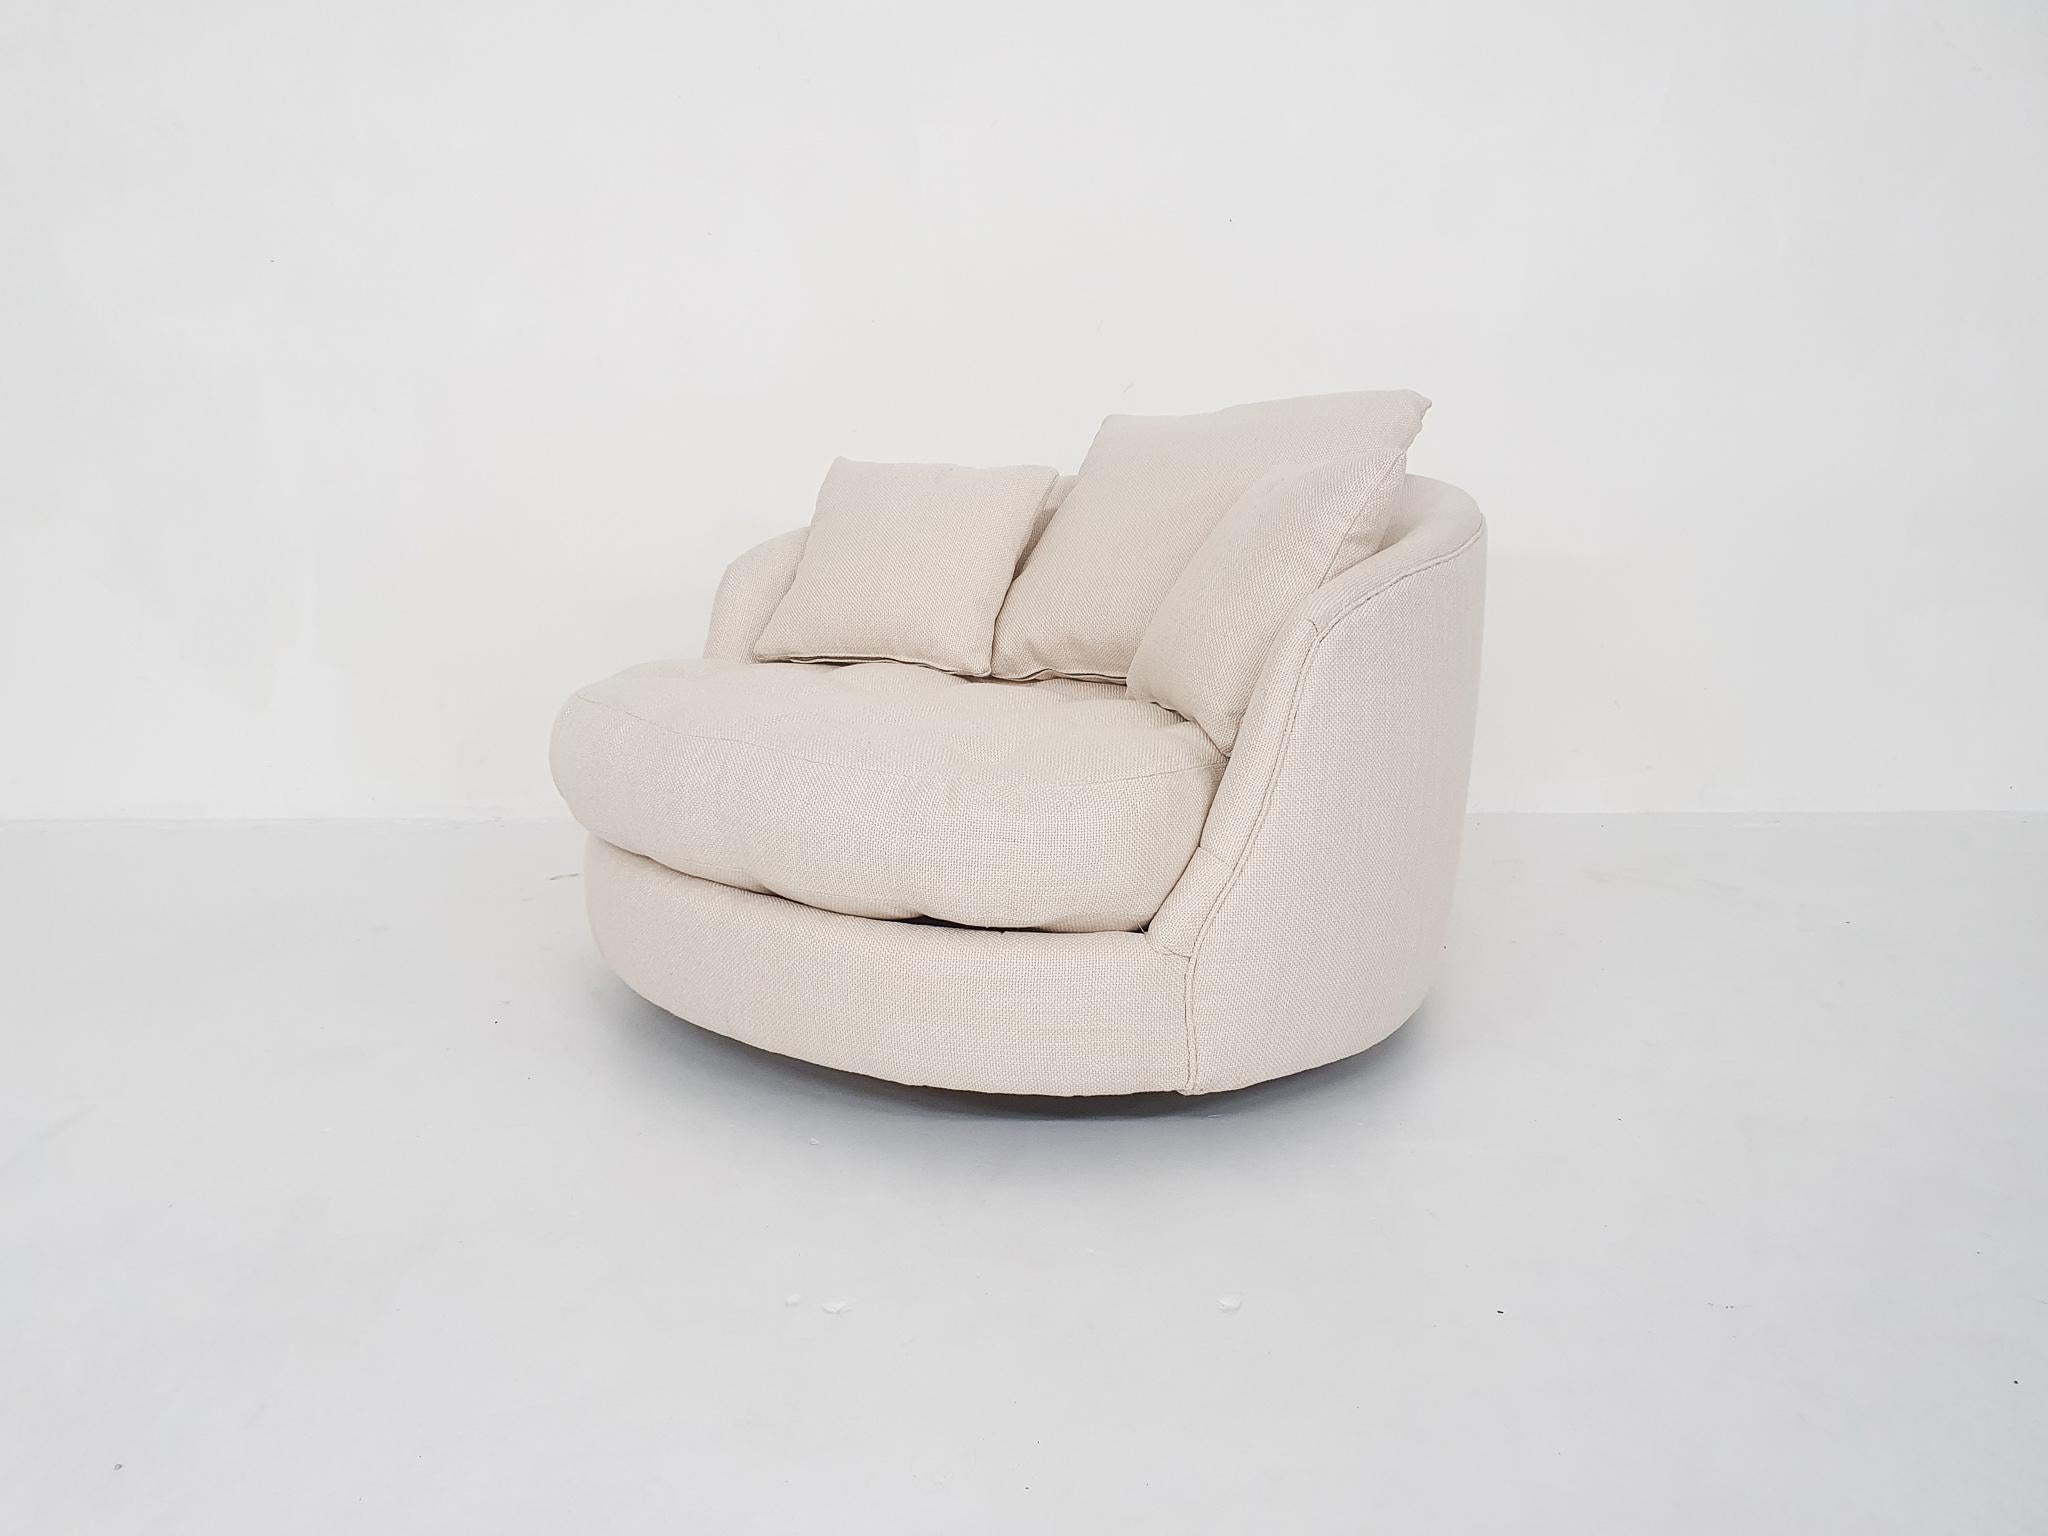 North American Authentic 1979 Milo Baughman No 3406 “Tub” Swivel Lounge Chair for Thayer Coggin